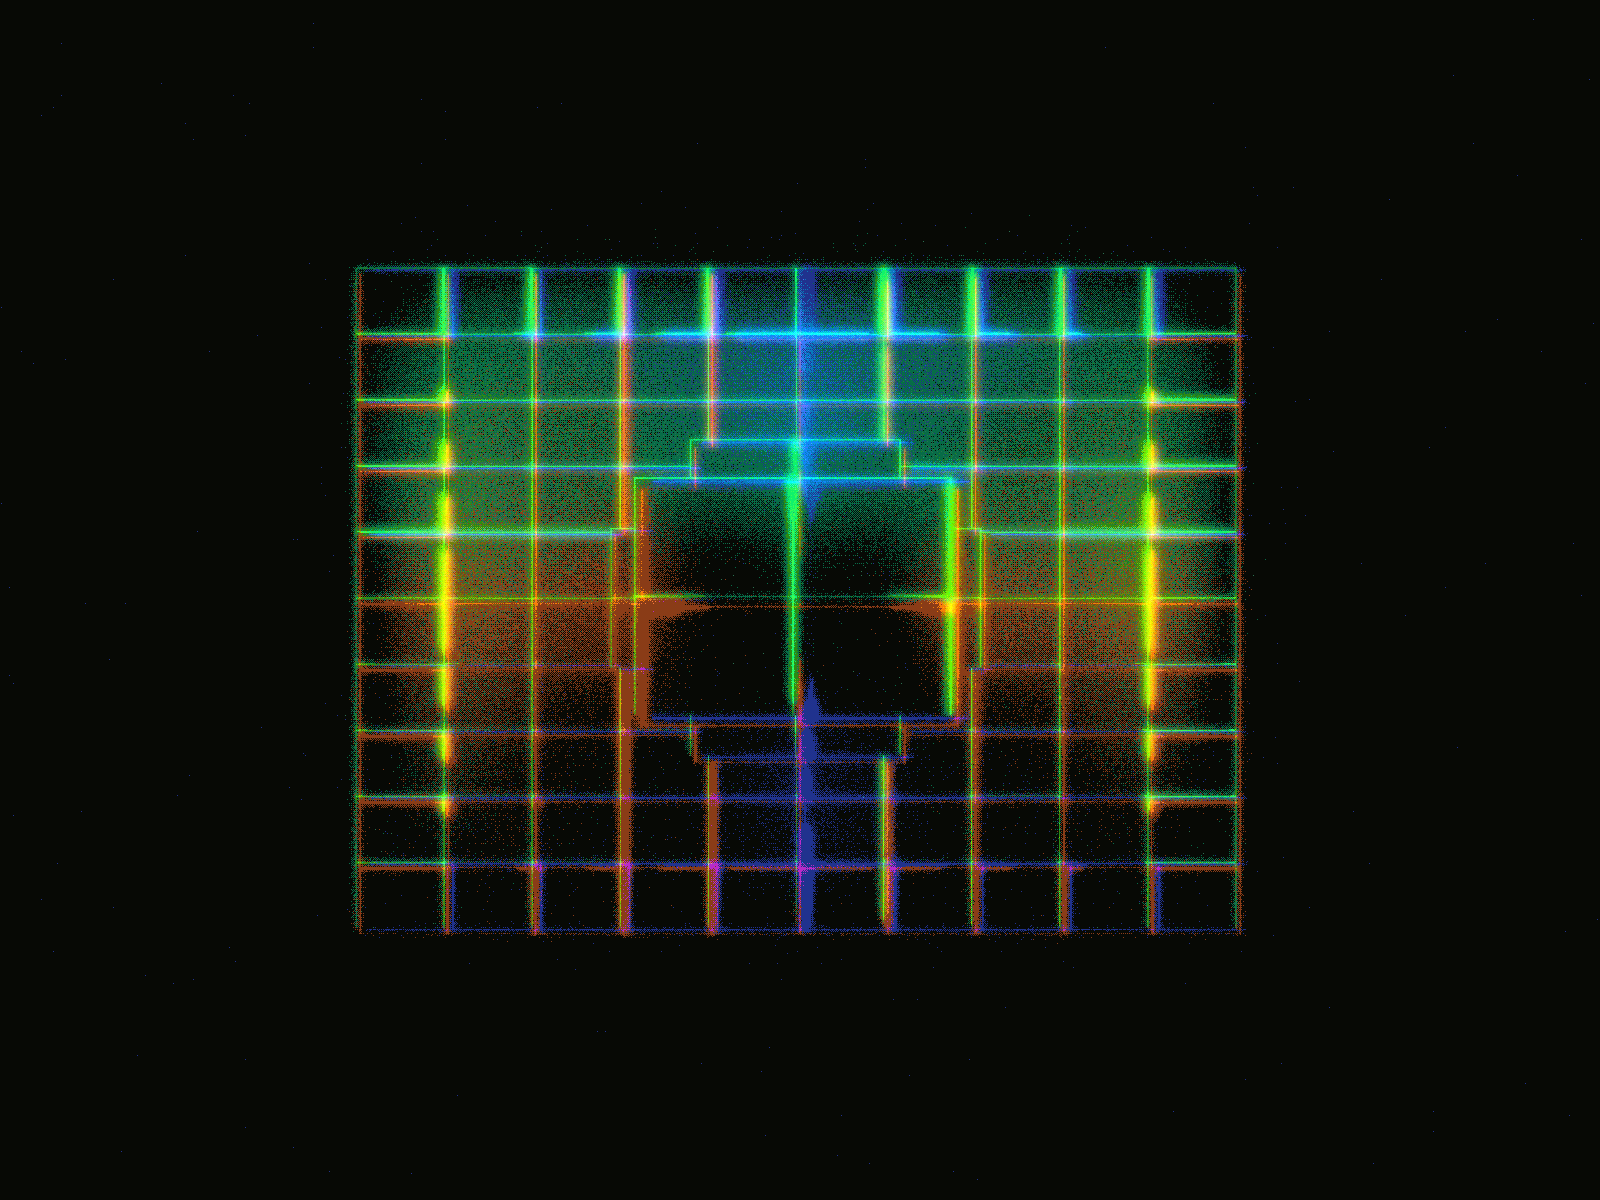 Neon Square Grid